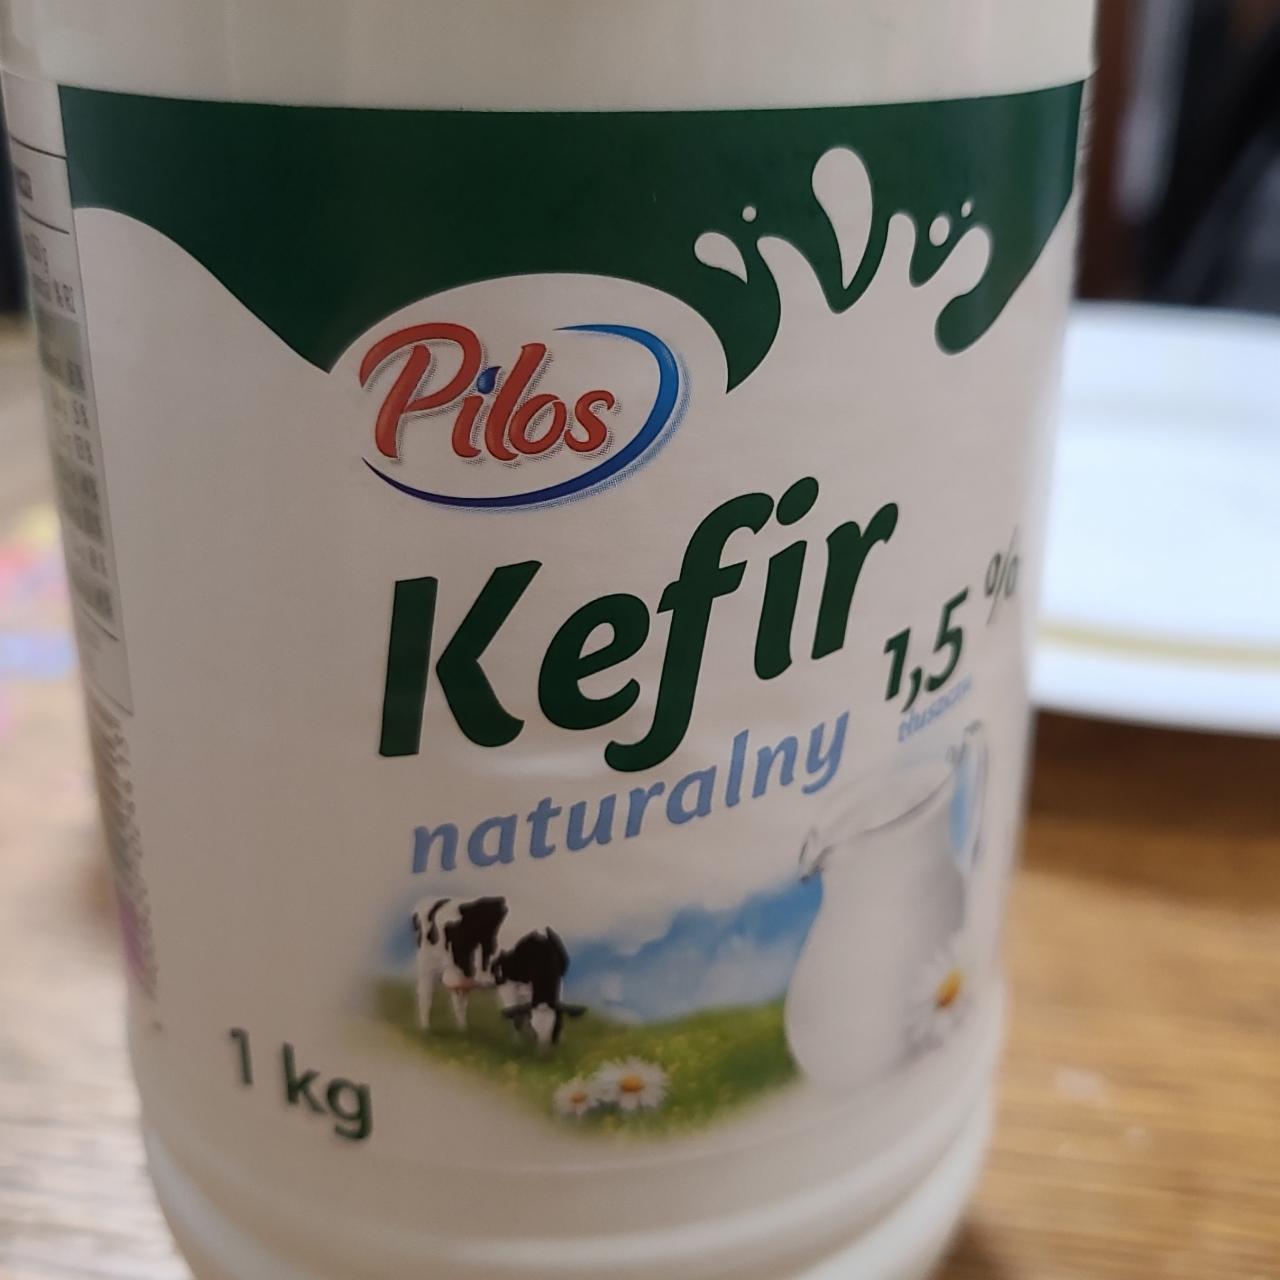 Fotografie - kefir naturalny 1.5% Pilos